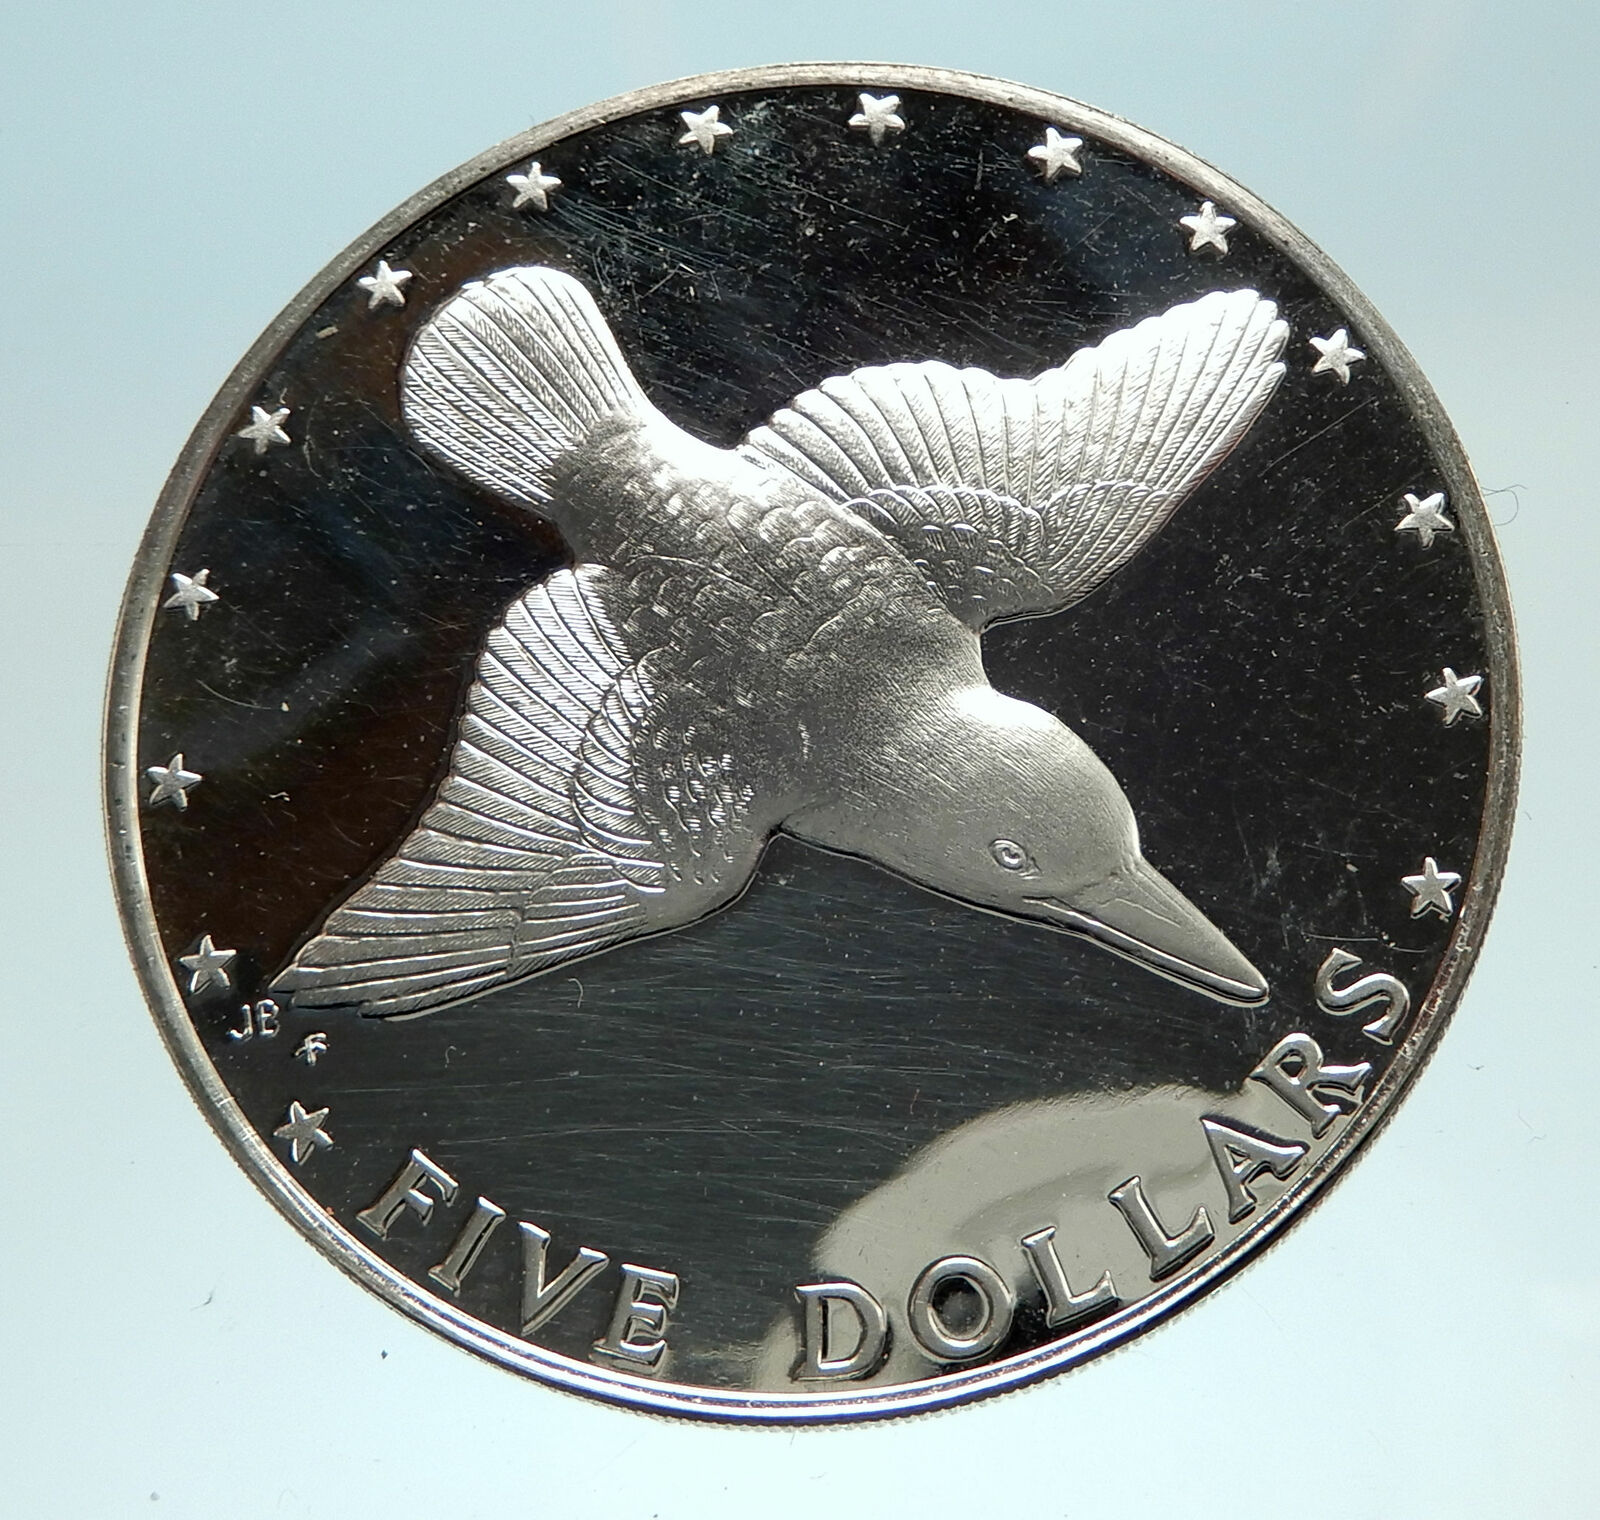 1976 COOK ISLANDS Proof Silver 5 Dollars Coin MANGARA KINGFISHER BIRD i76726